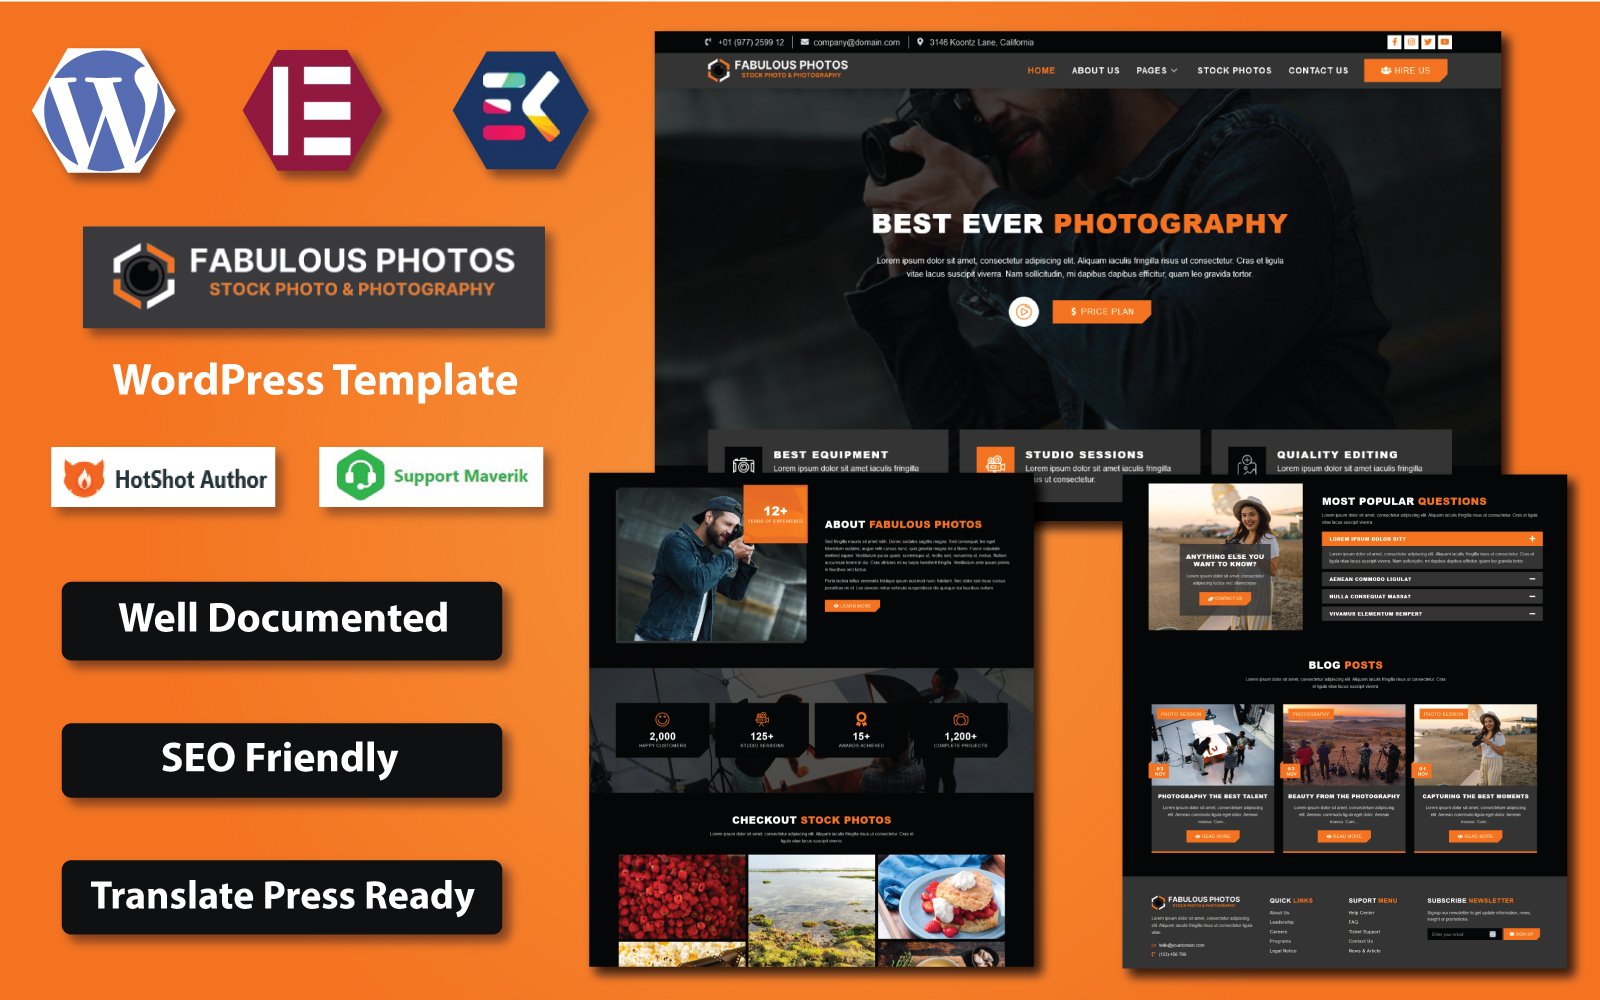 Fabulous Photos - Stock Photo & Photography WordPress Elementor Template